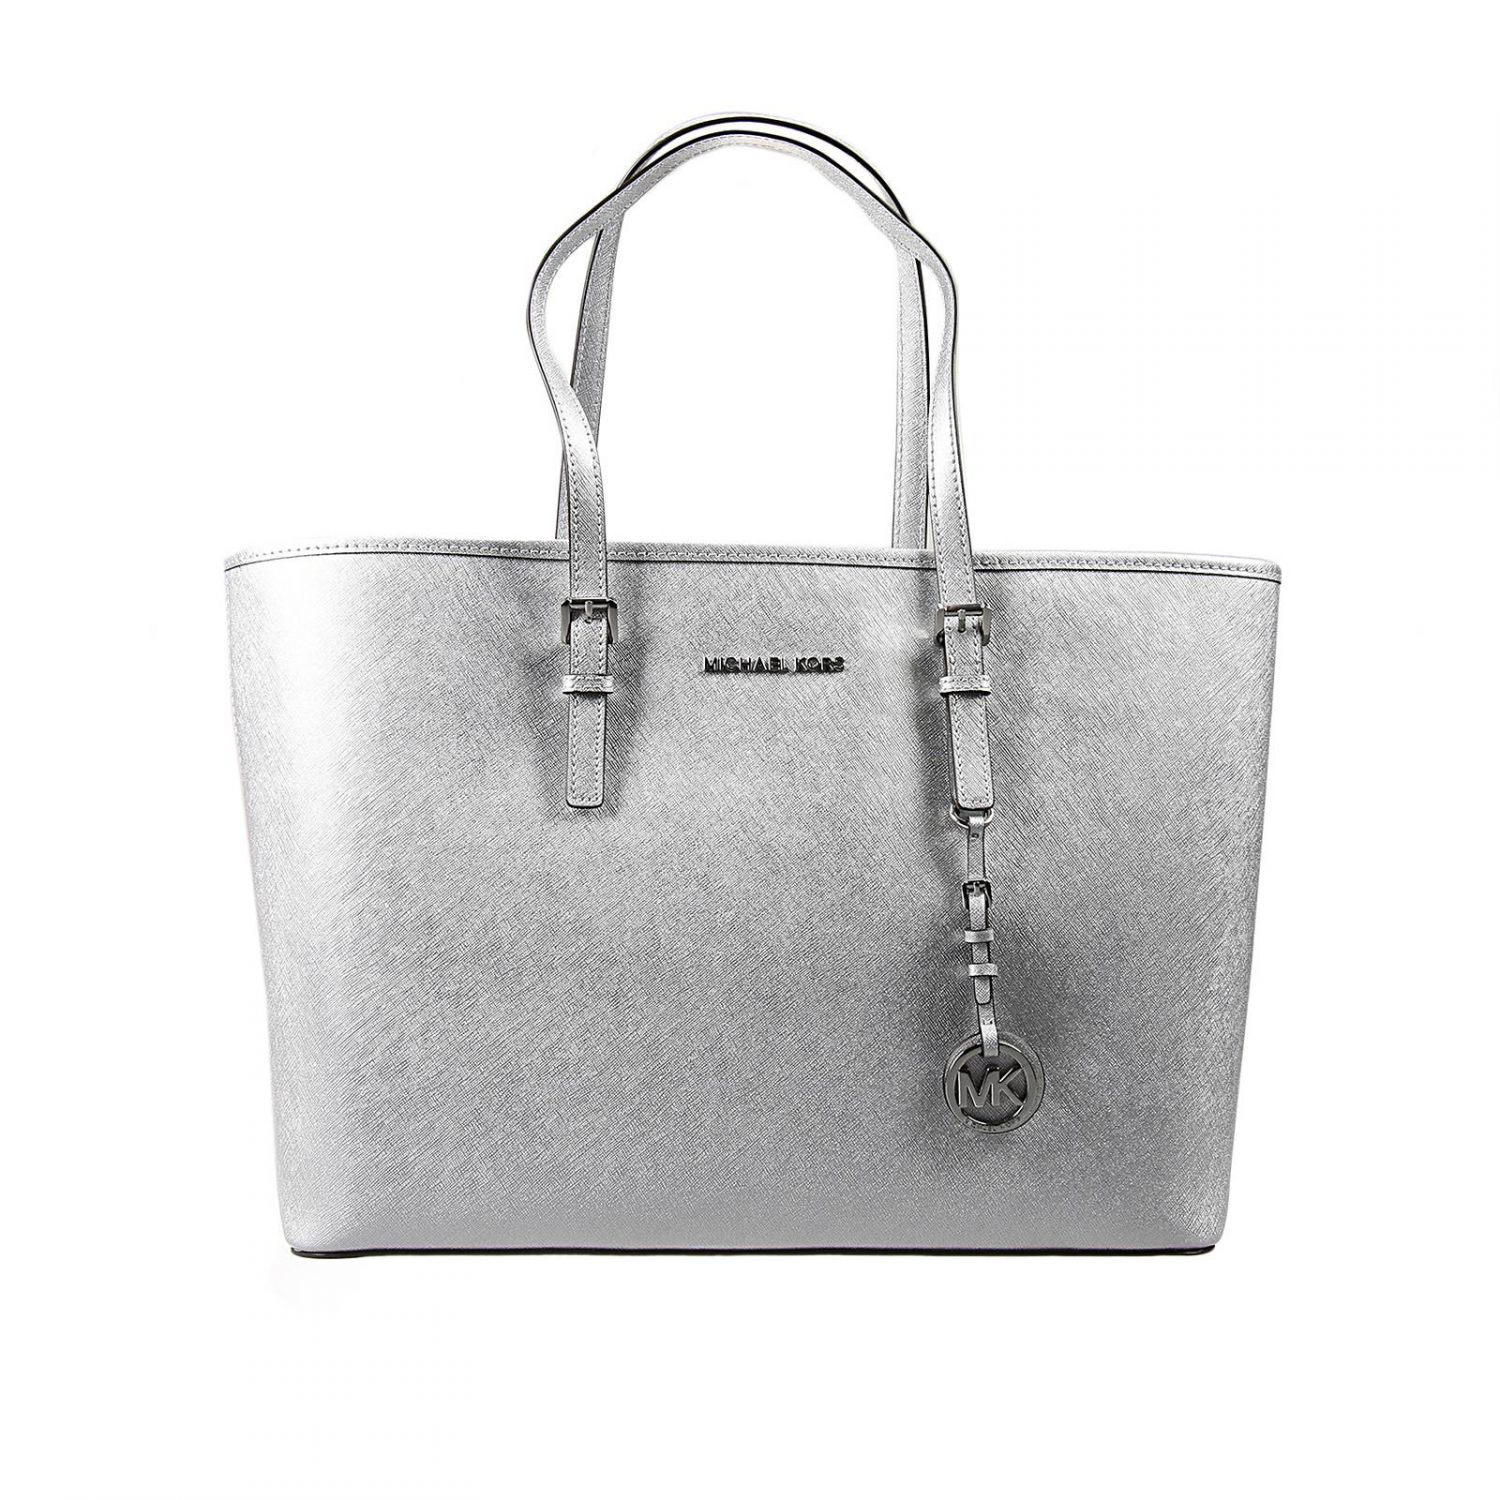 Michael Kors Handbag Woman in Silver (Metallic) - Lyst